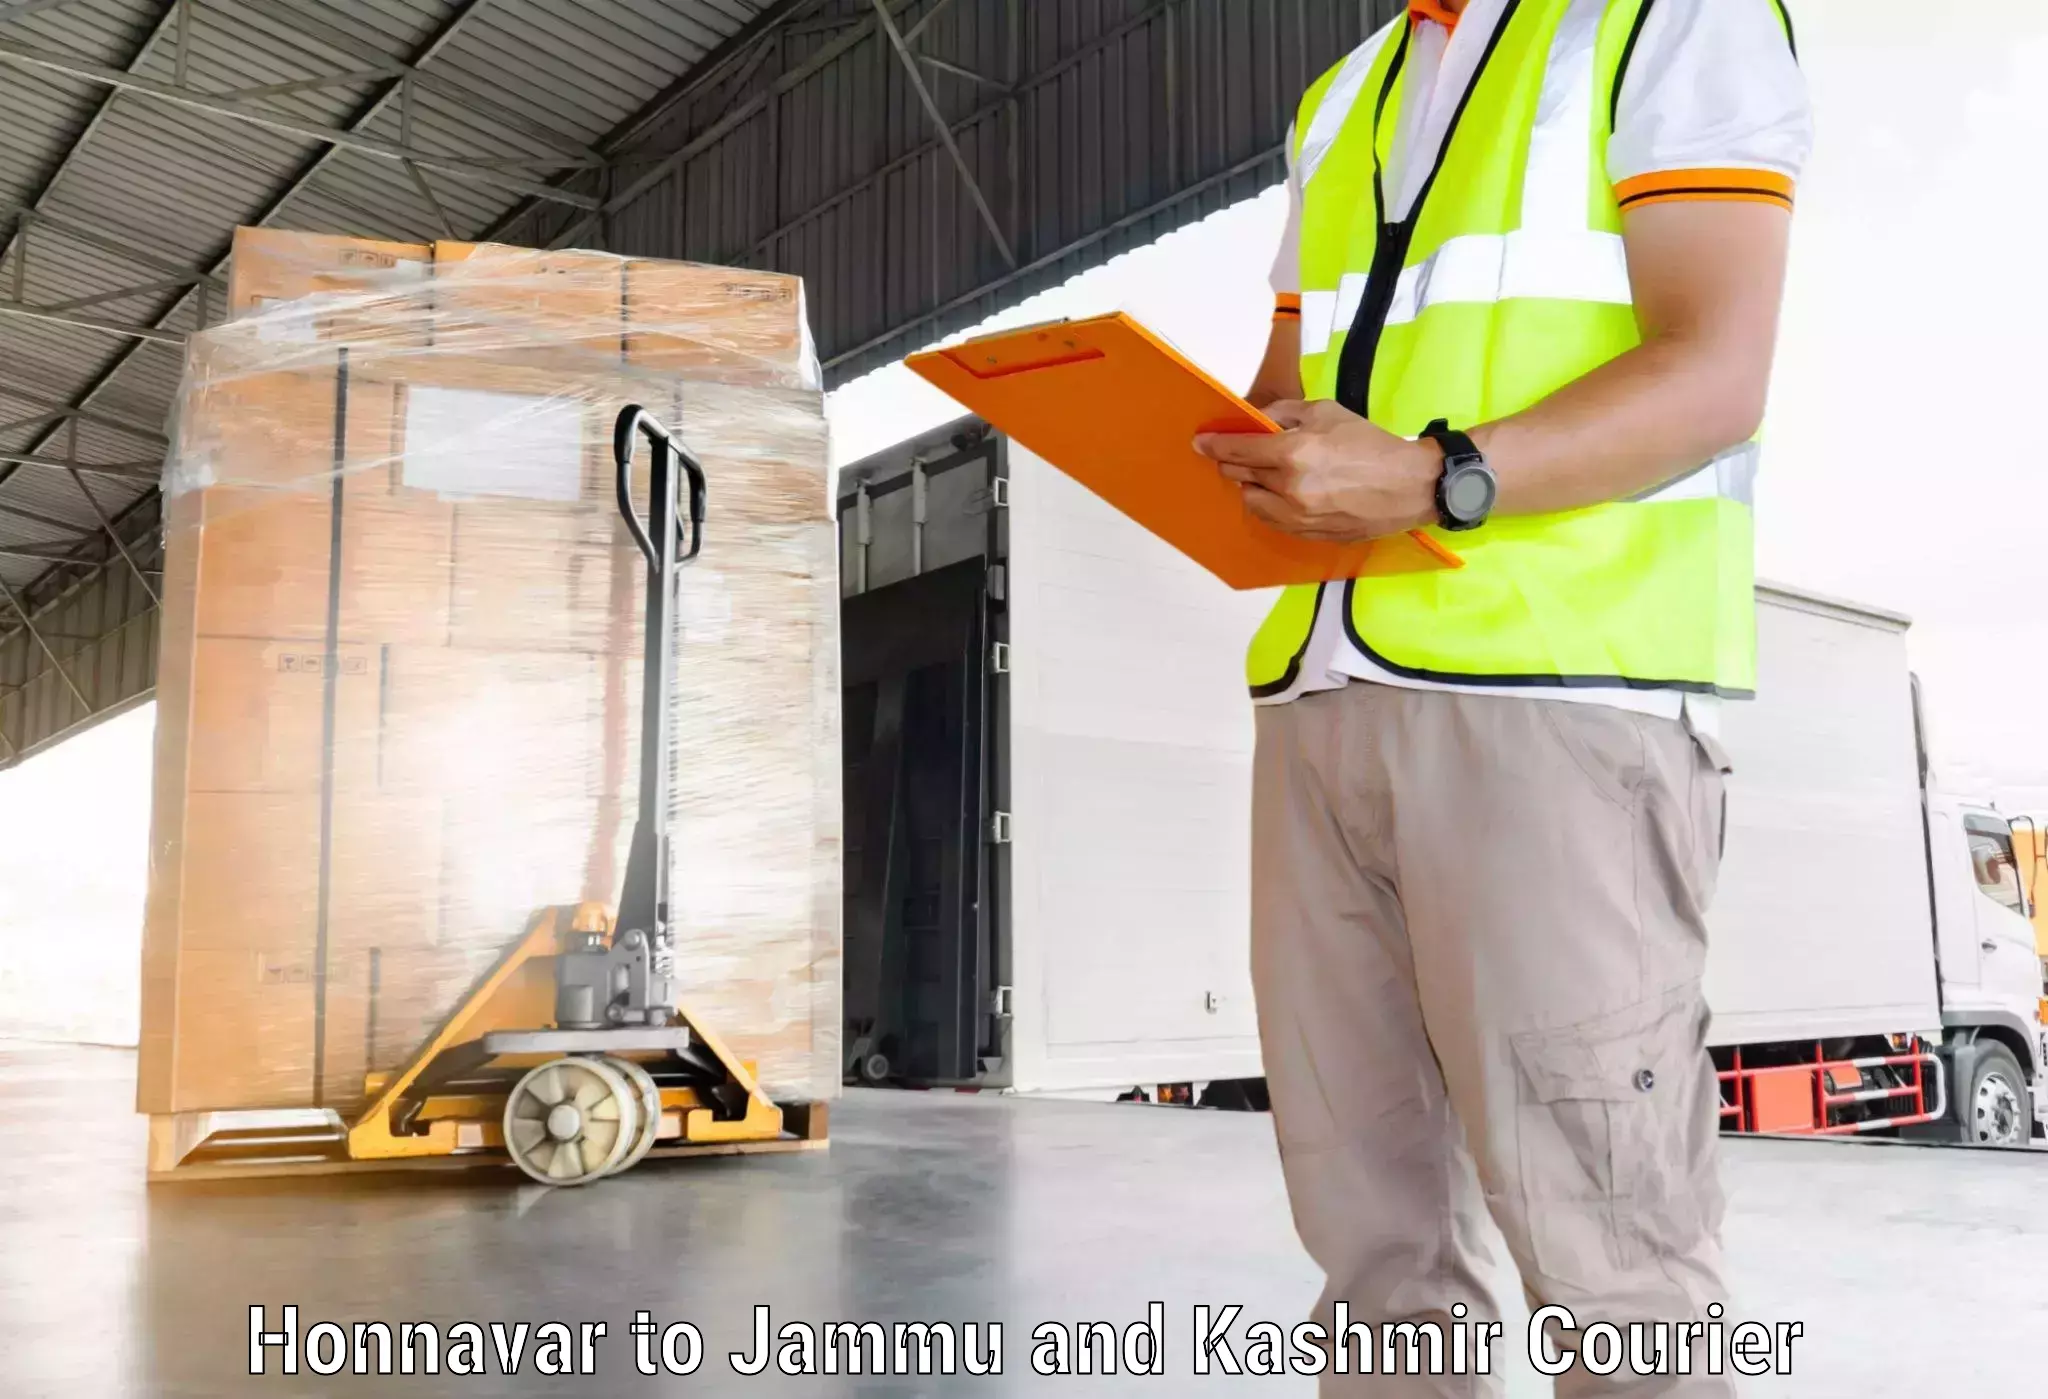 State-of-the-art courier technology Honnavar to Nagrota